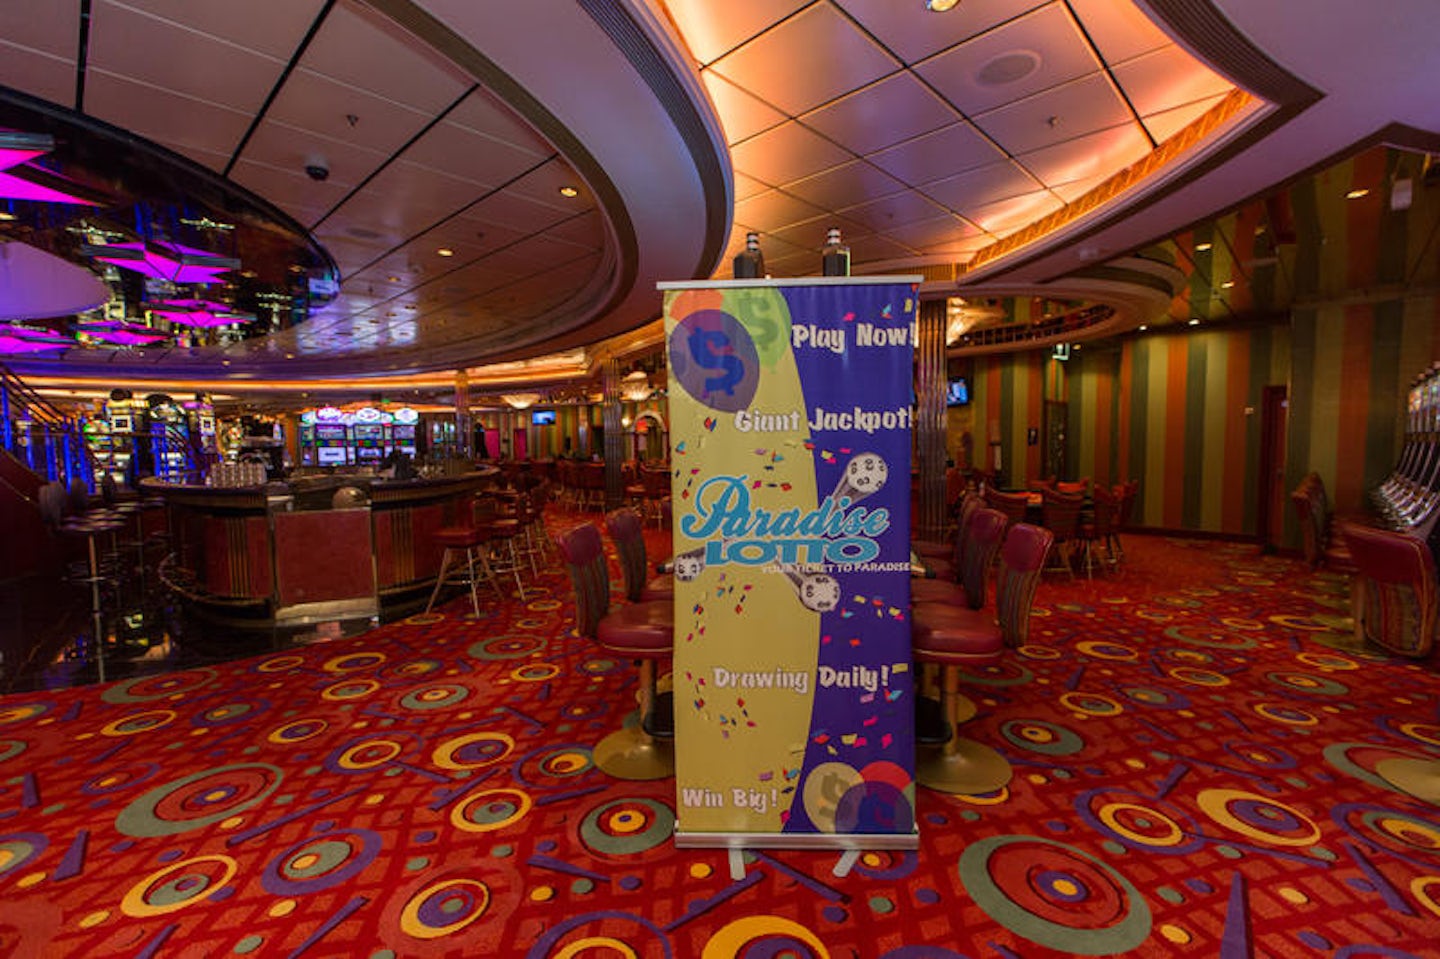 Casino Royale on Liberty of the Seas